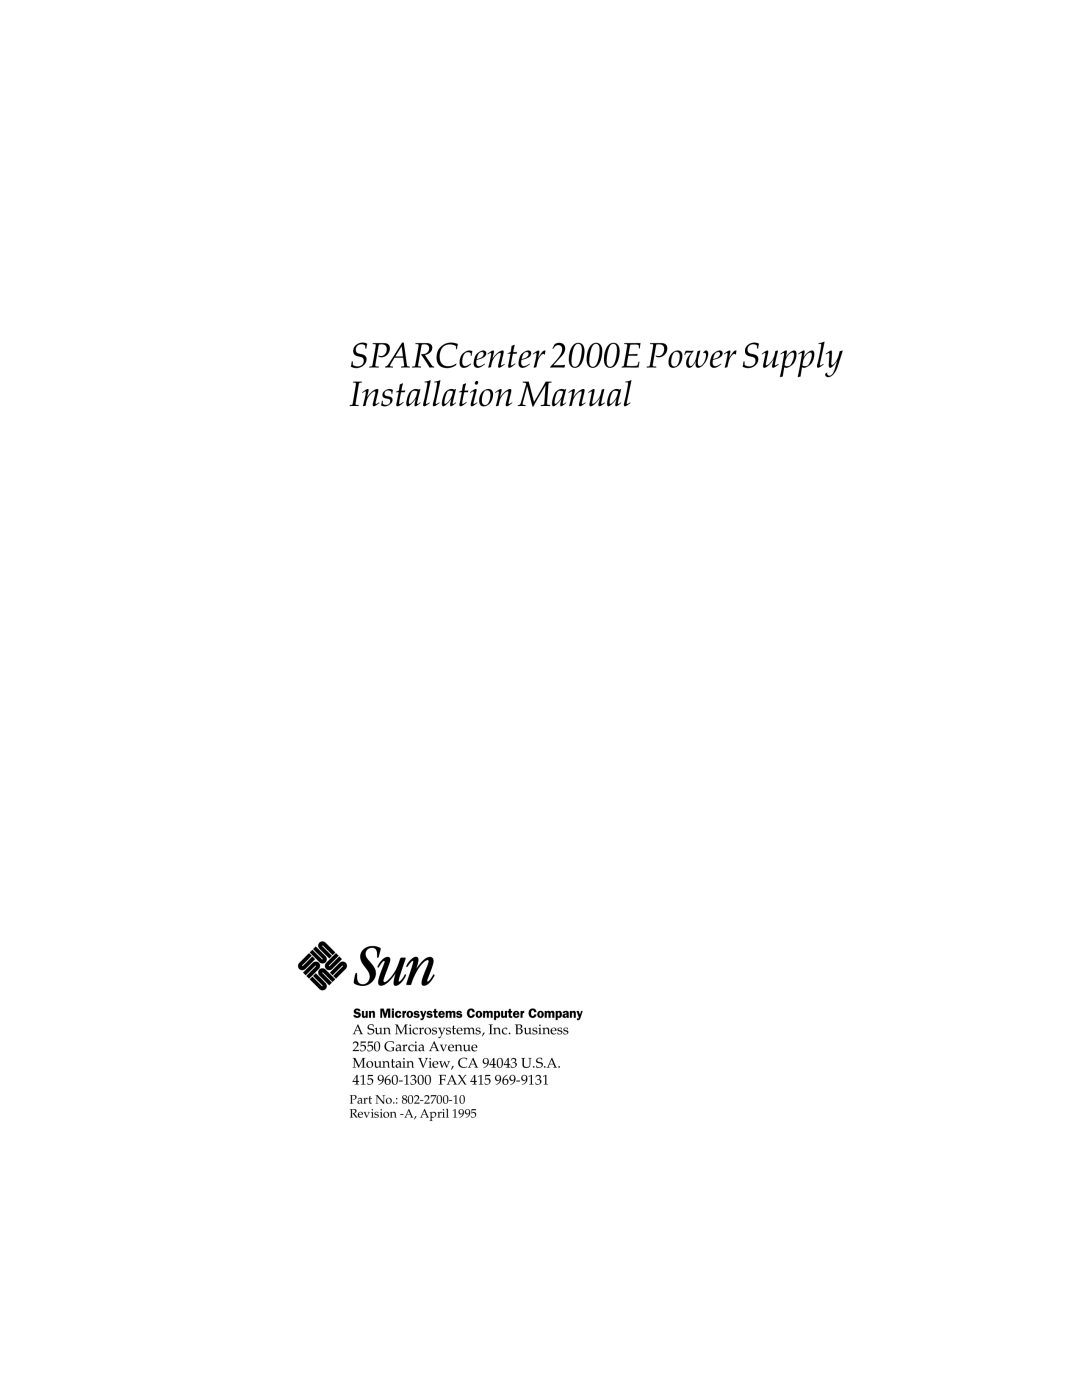 Sun Microsystems installation manual SPARCcenter 2000E Power Supply Installation Manual 